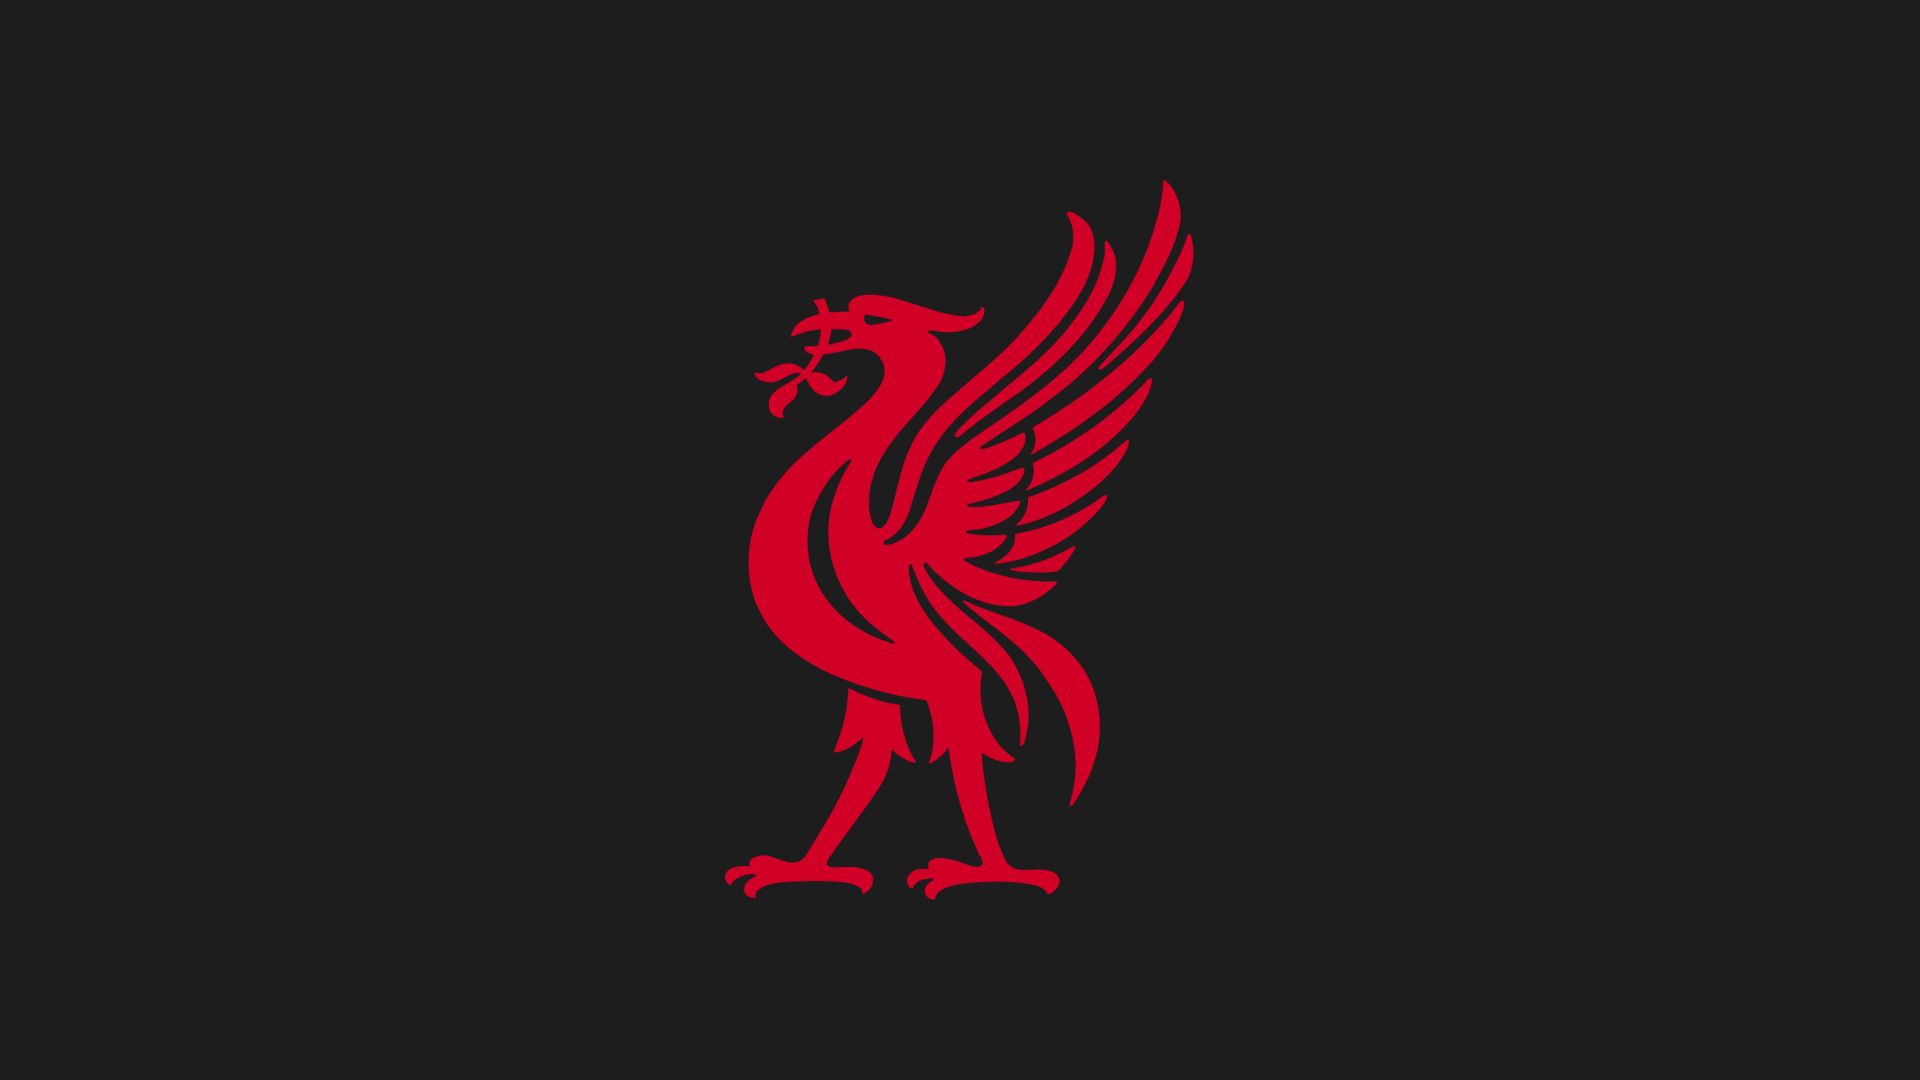 Liverpool FC logo